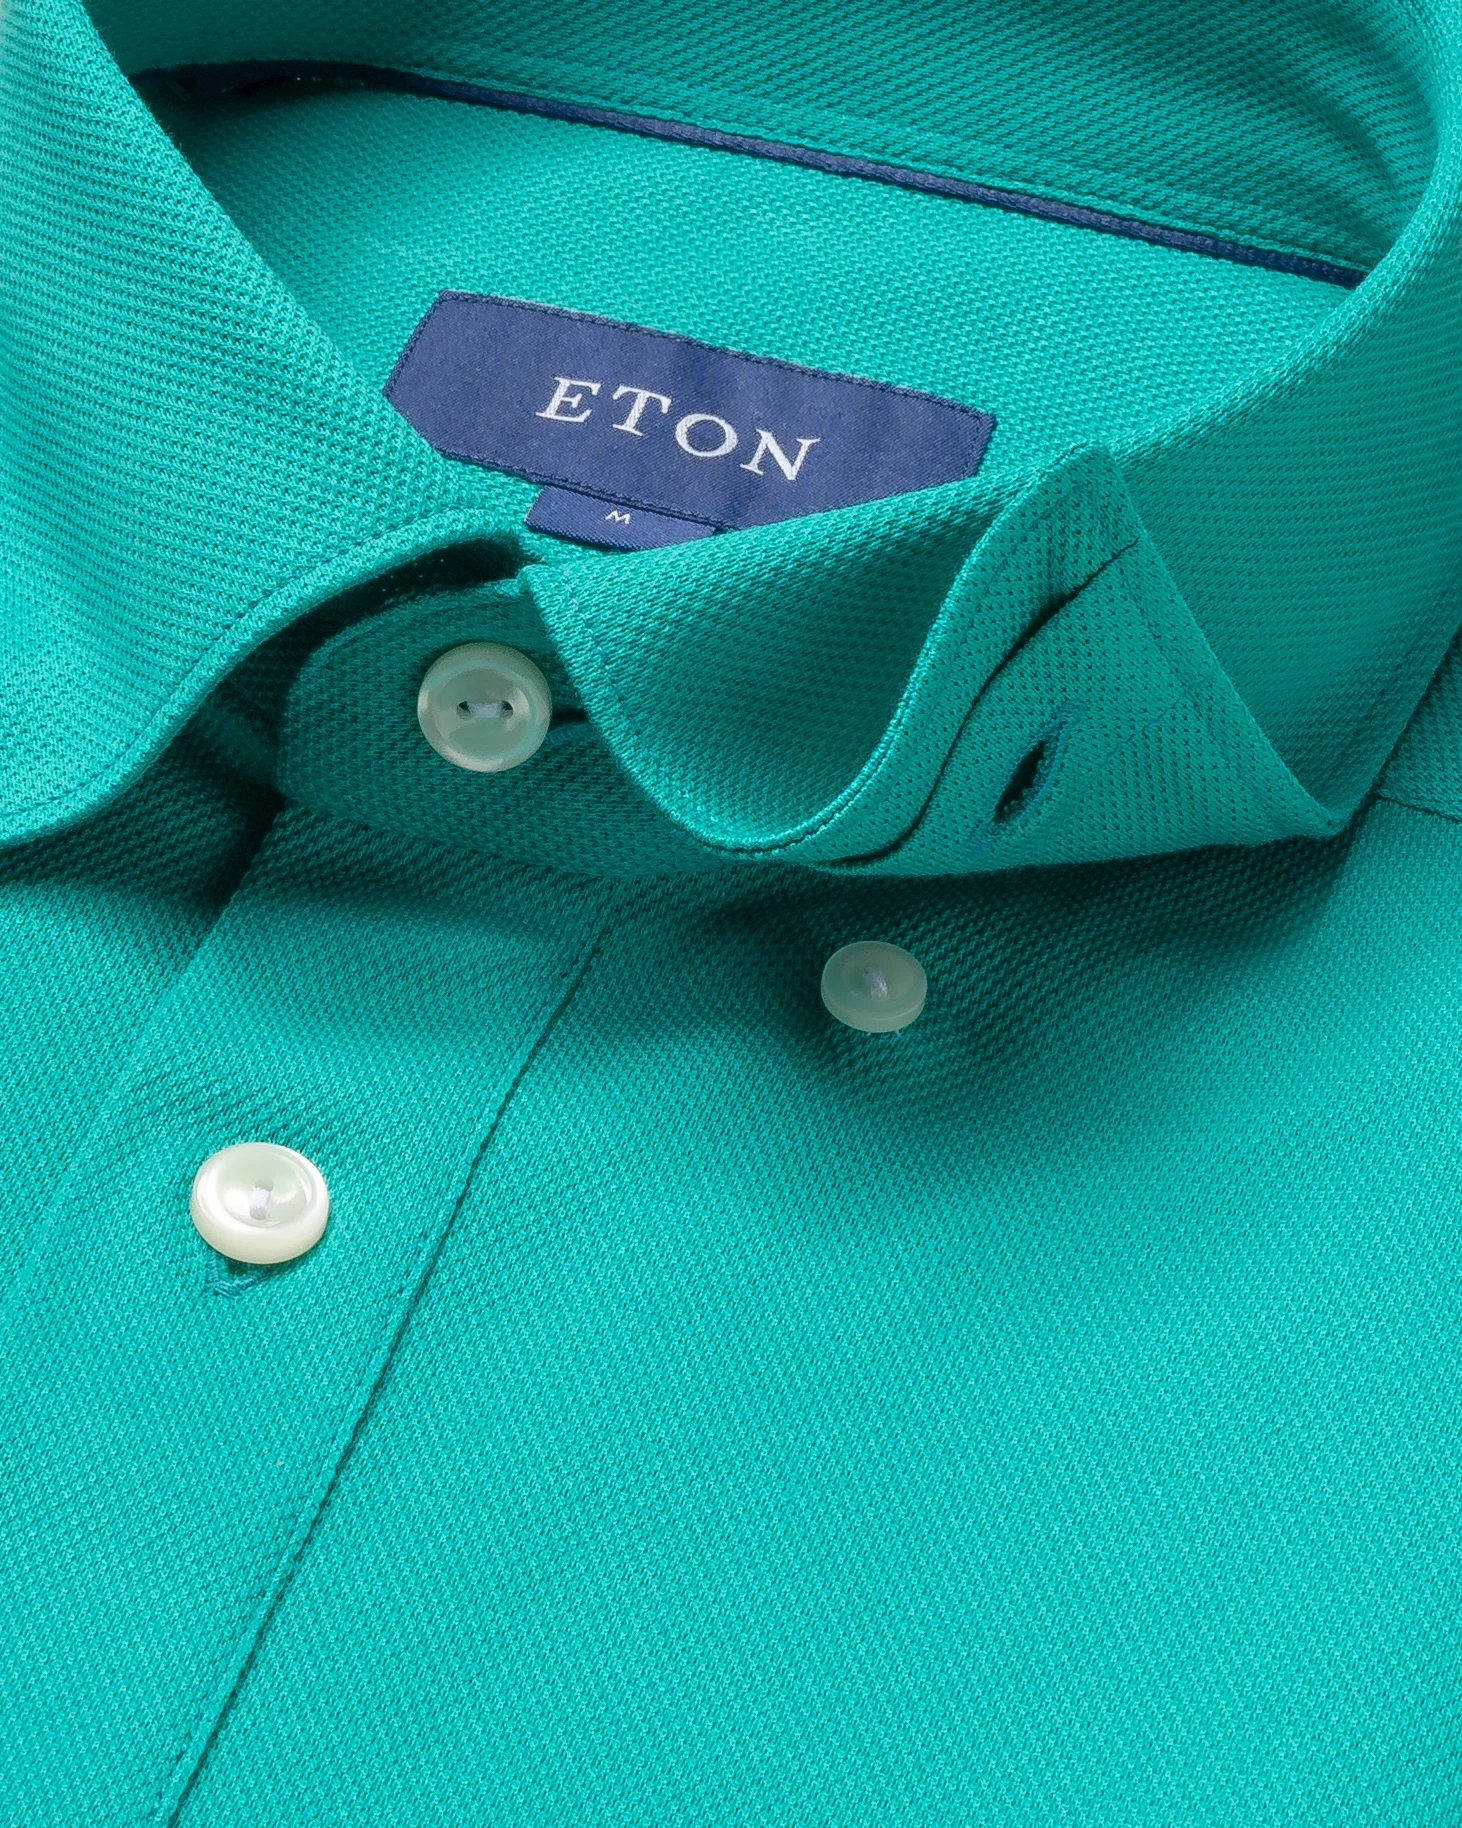 Eton - jade polo shirt short sleeved